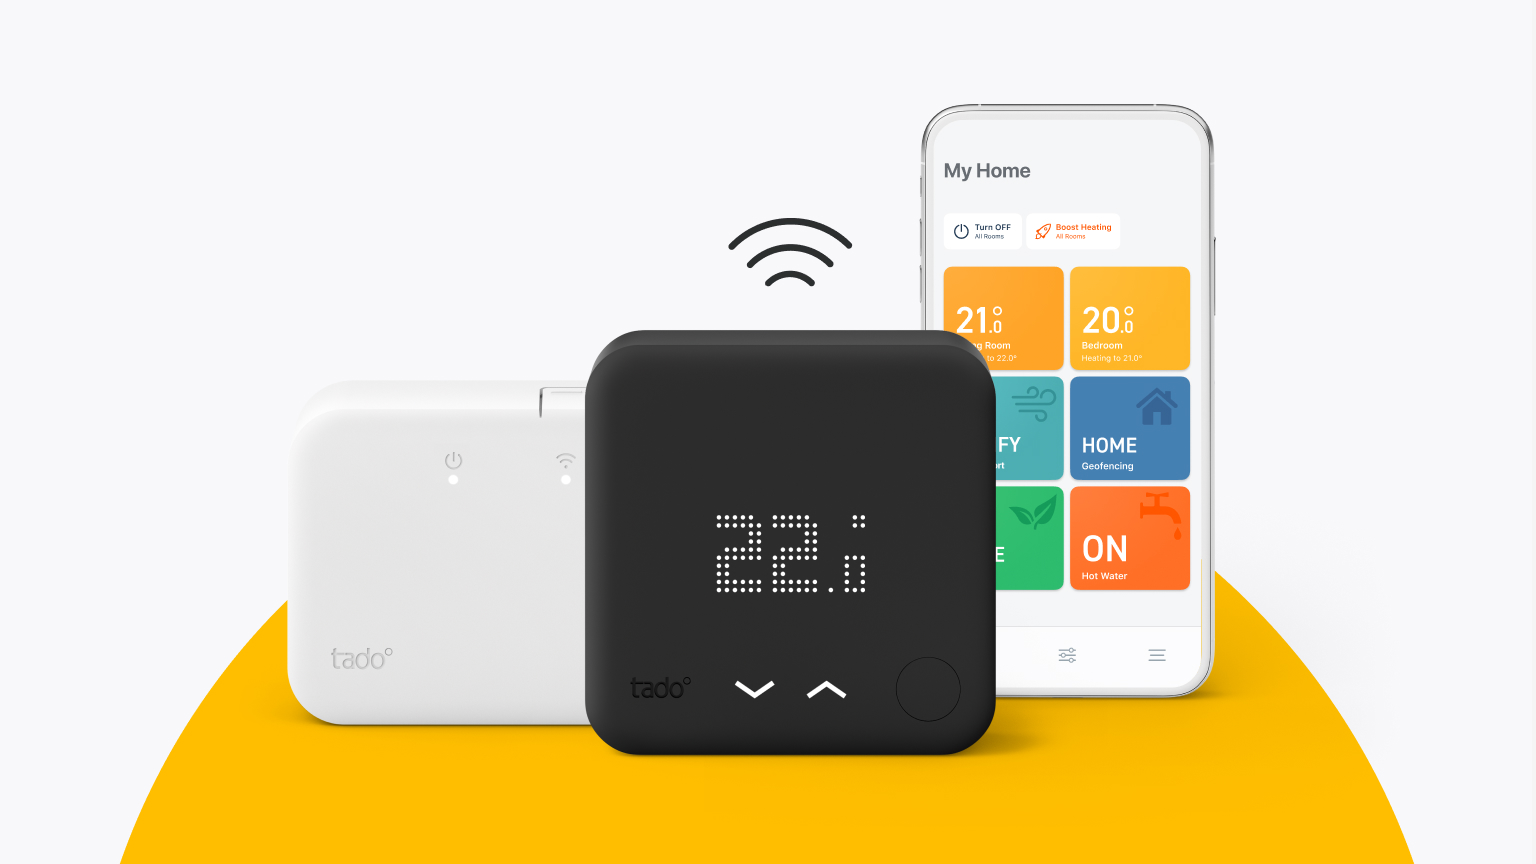 tado° Starter Kit - Wireless Smart Thermostat V3+ (Including Hot Water  Control)